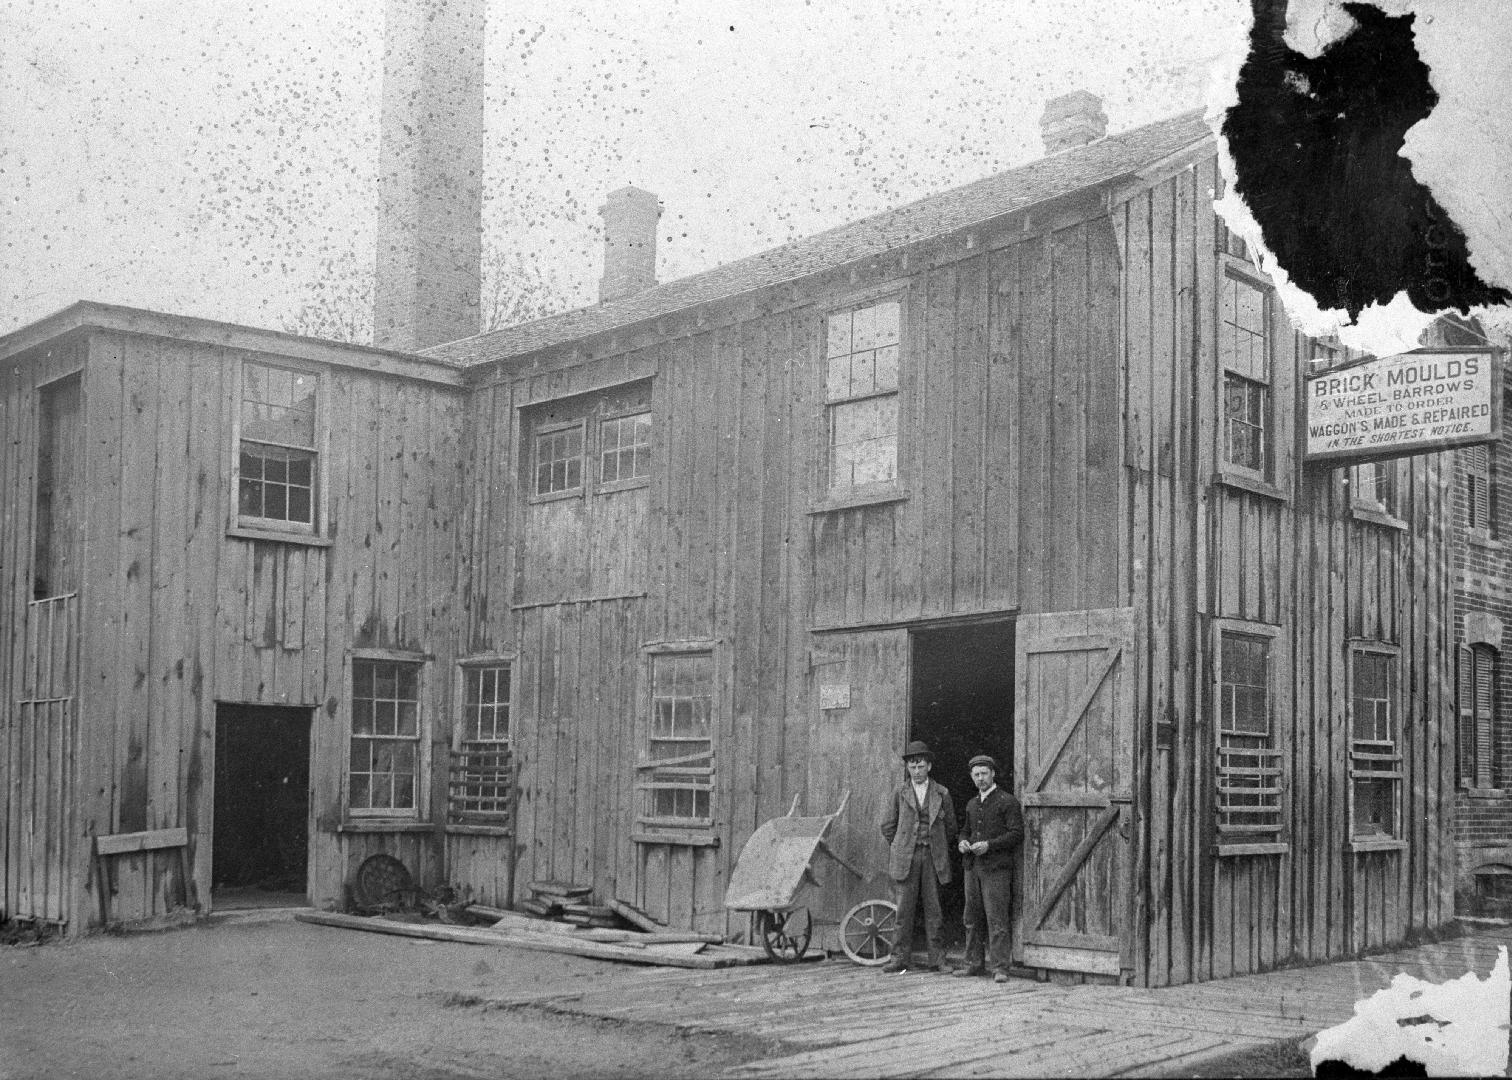 Image shows a few people standing beside open doors of brickmakers' supplies building.